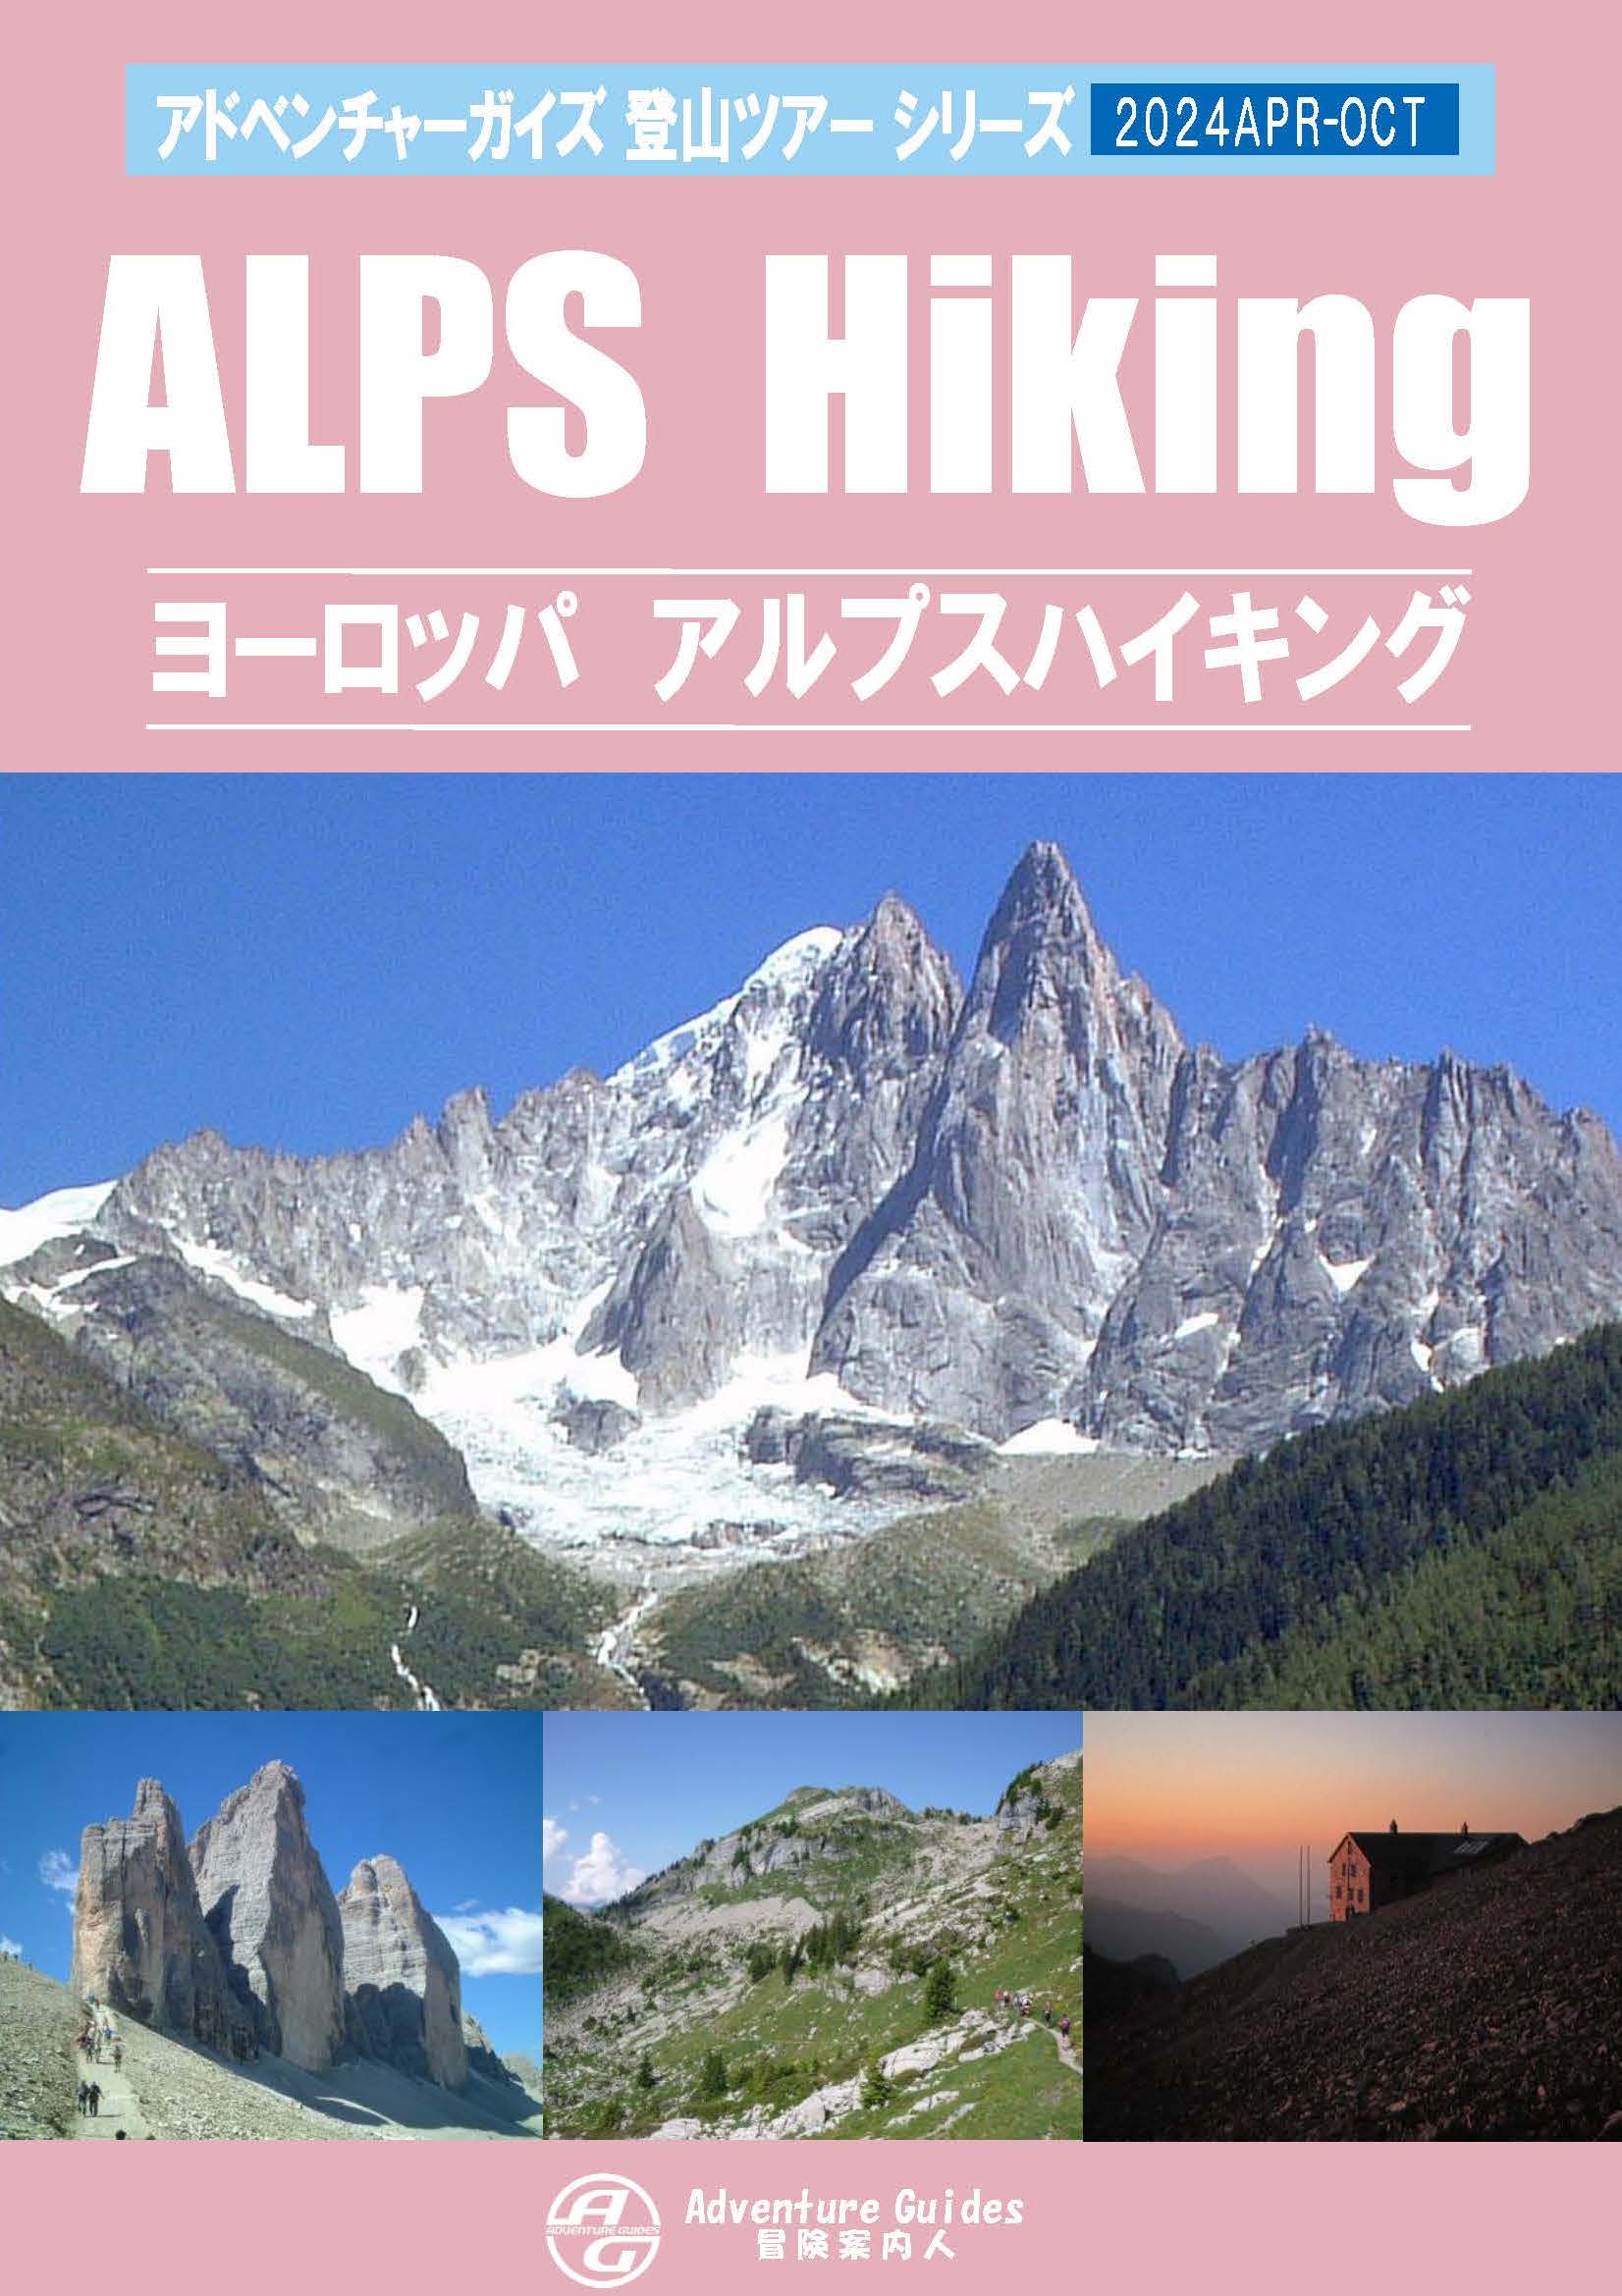 ALPS Hiking2024